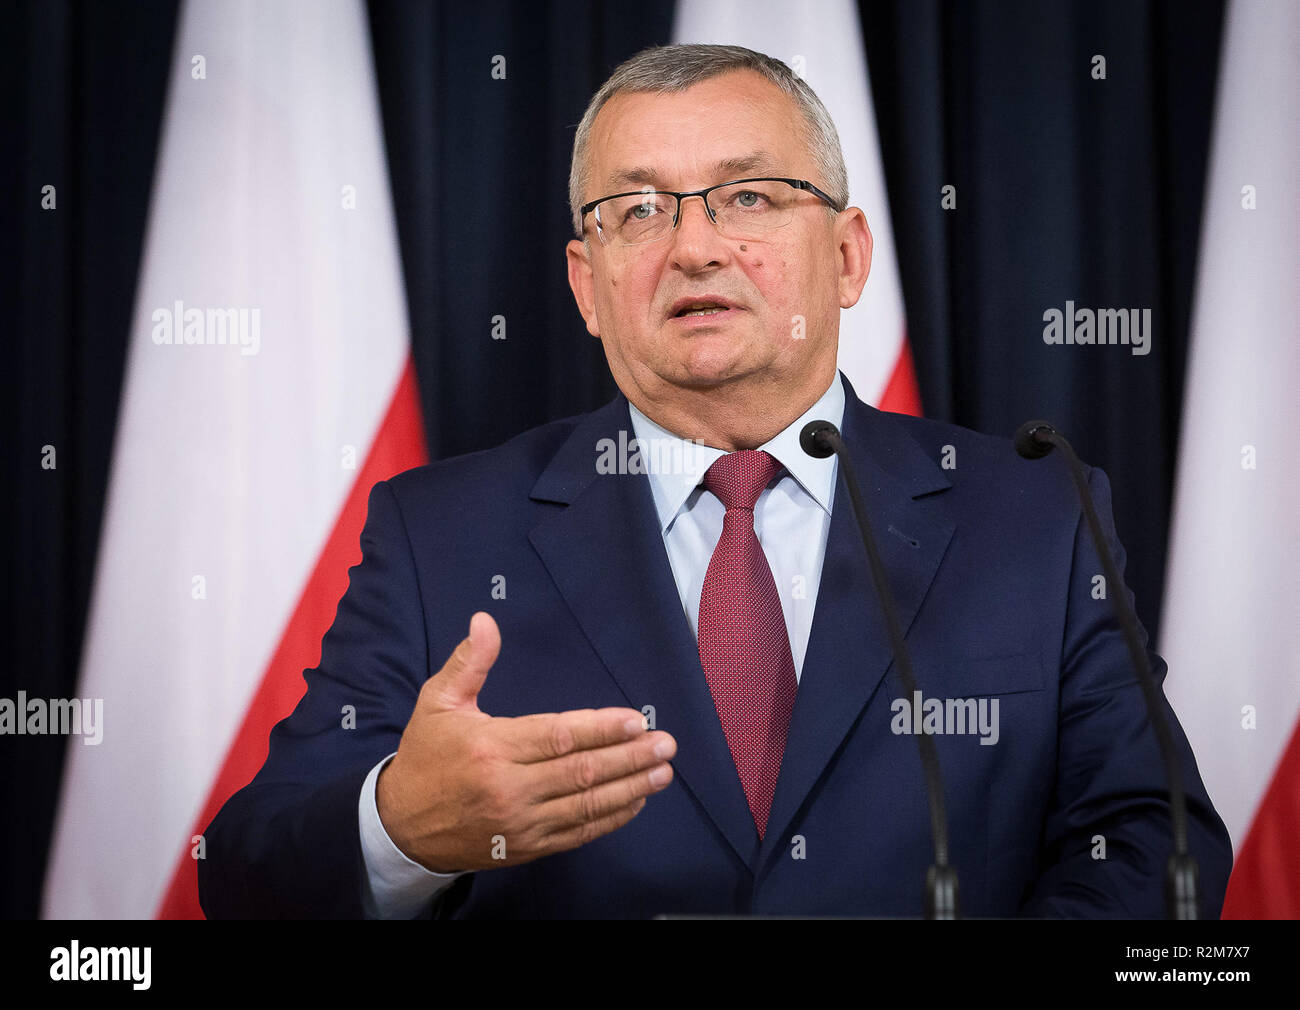 Andrzej Adamczyk in Warsaw, Poland on 2 October 2018 Stock Photo